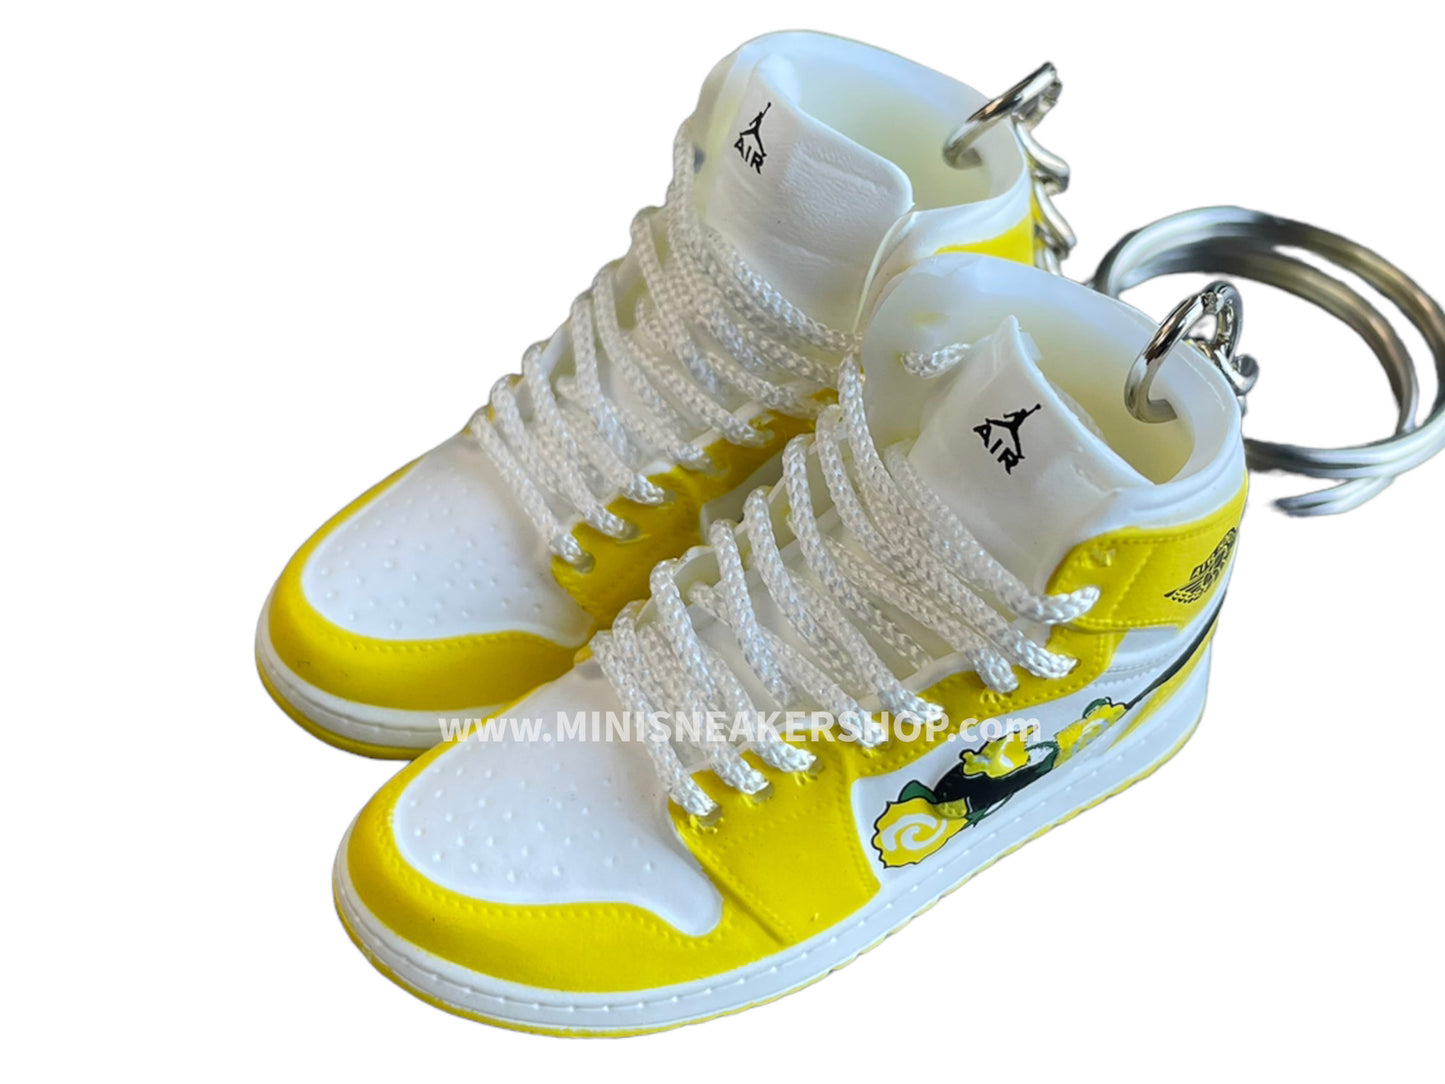 Mini sneaker keychain 3D  Air Jordan 1 - Dynamic Yellow